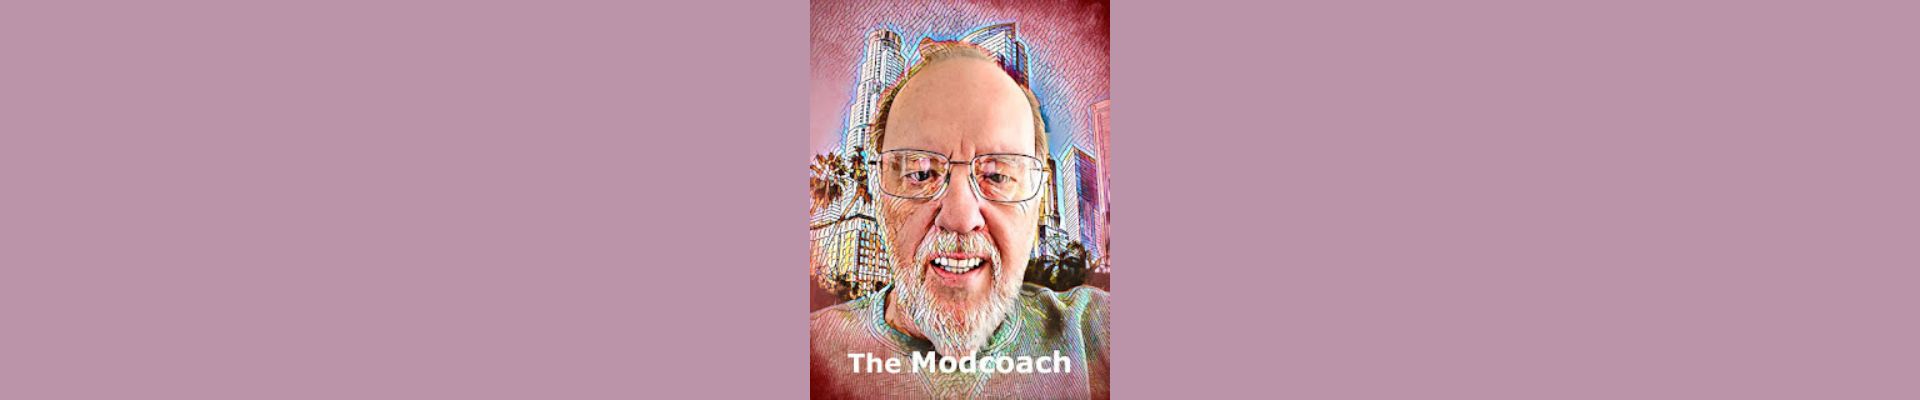 The Mod Coach